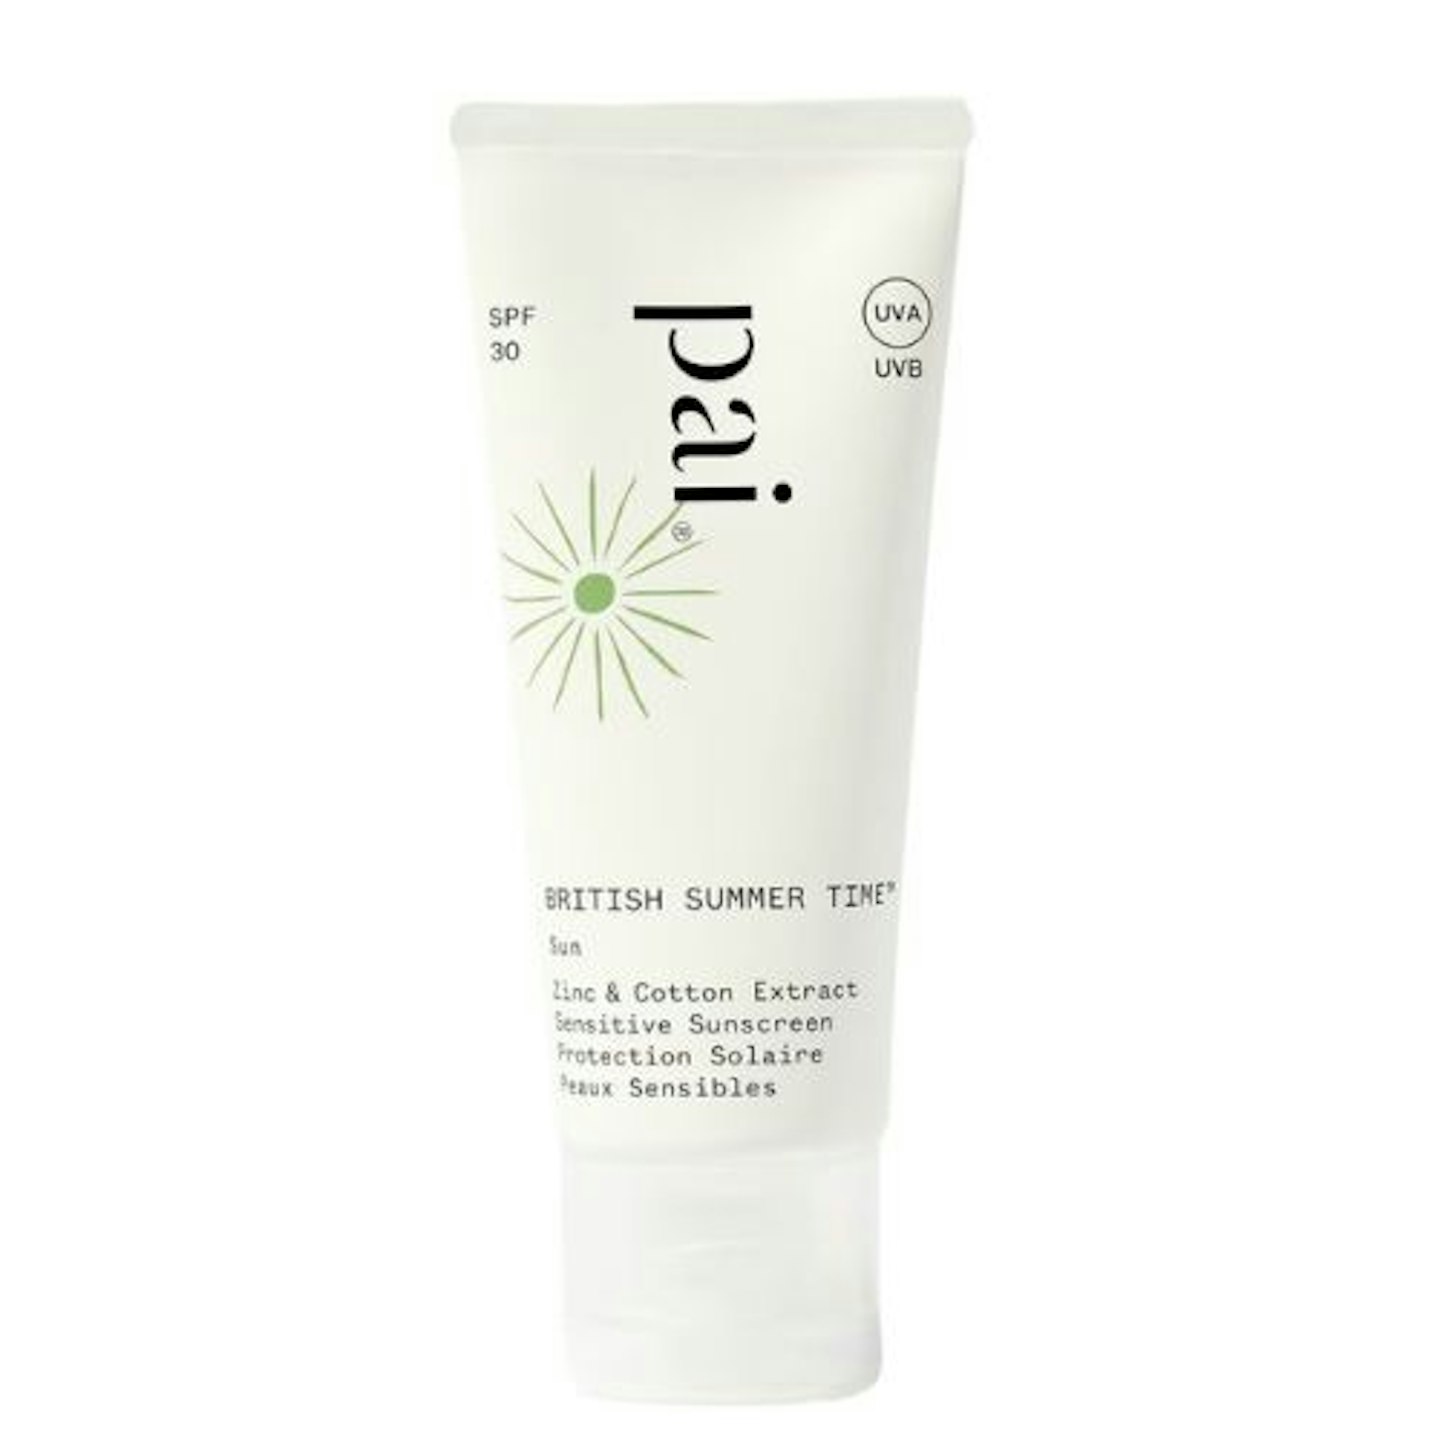 Pai Skincare British Summer Time Sensitive Sunscreen